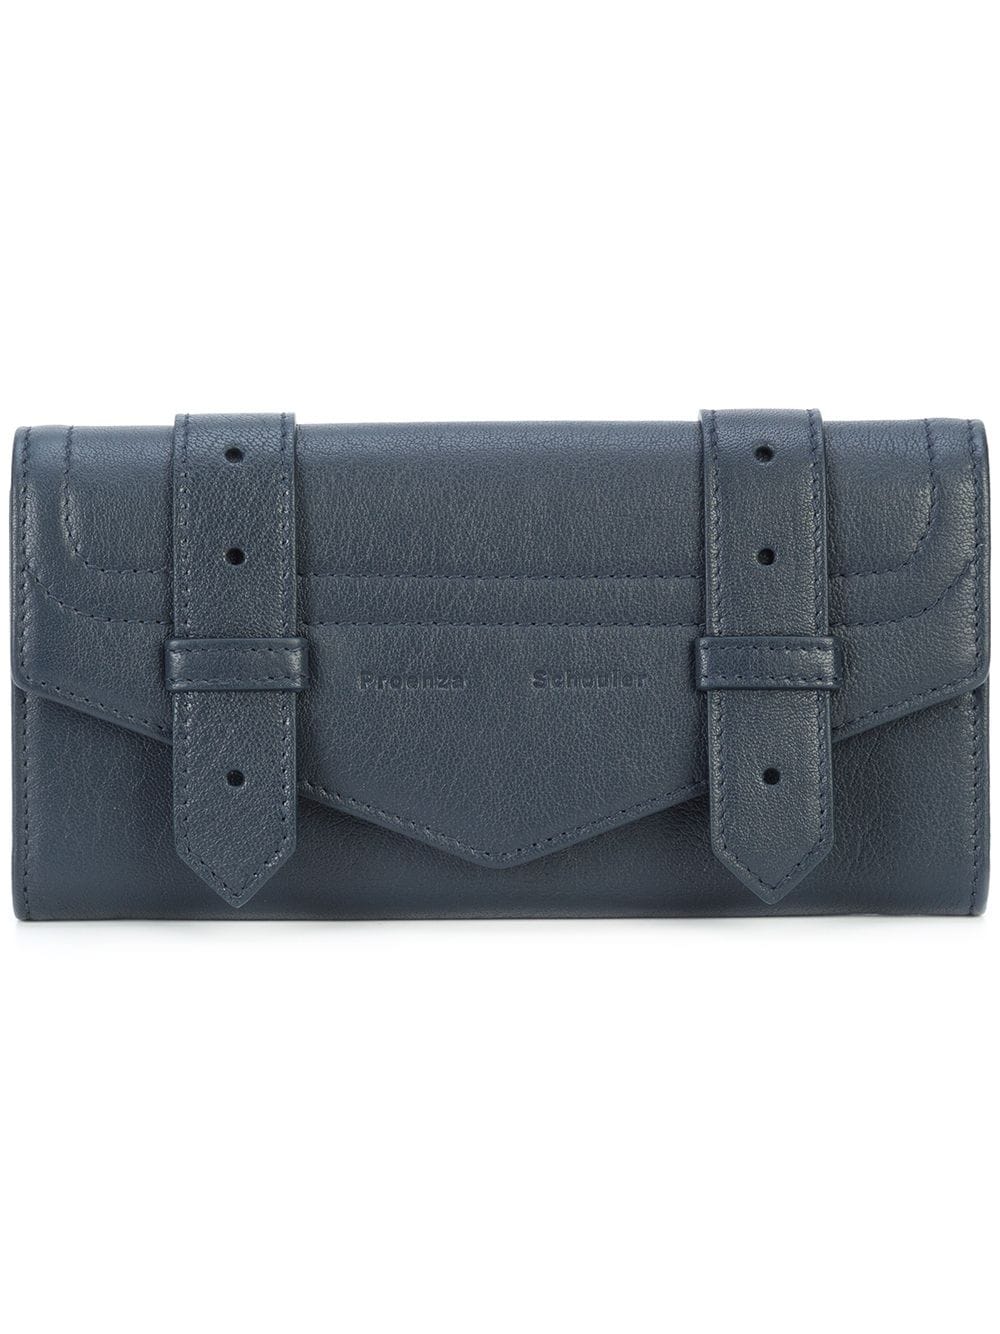 Proenza Schouler PS1 Continental Wallet - Blue von Proenza Schouler